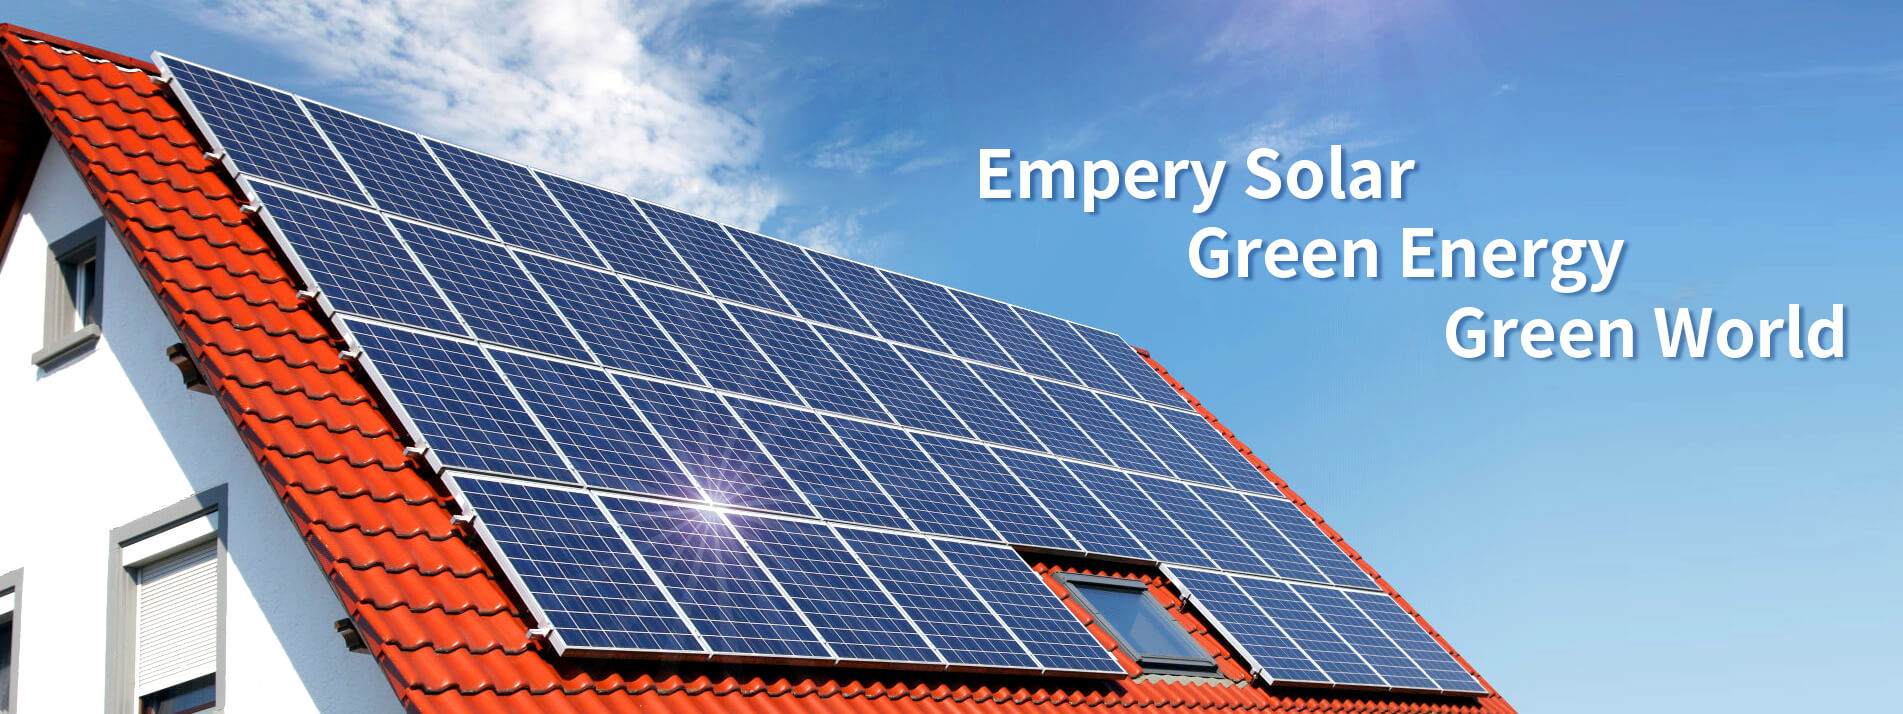 Empery Solar   Green Energy  Green World 